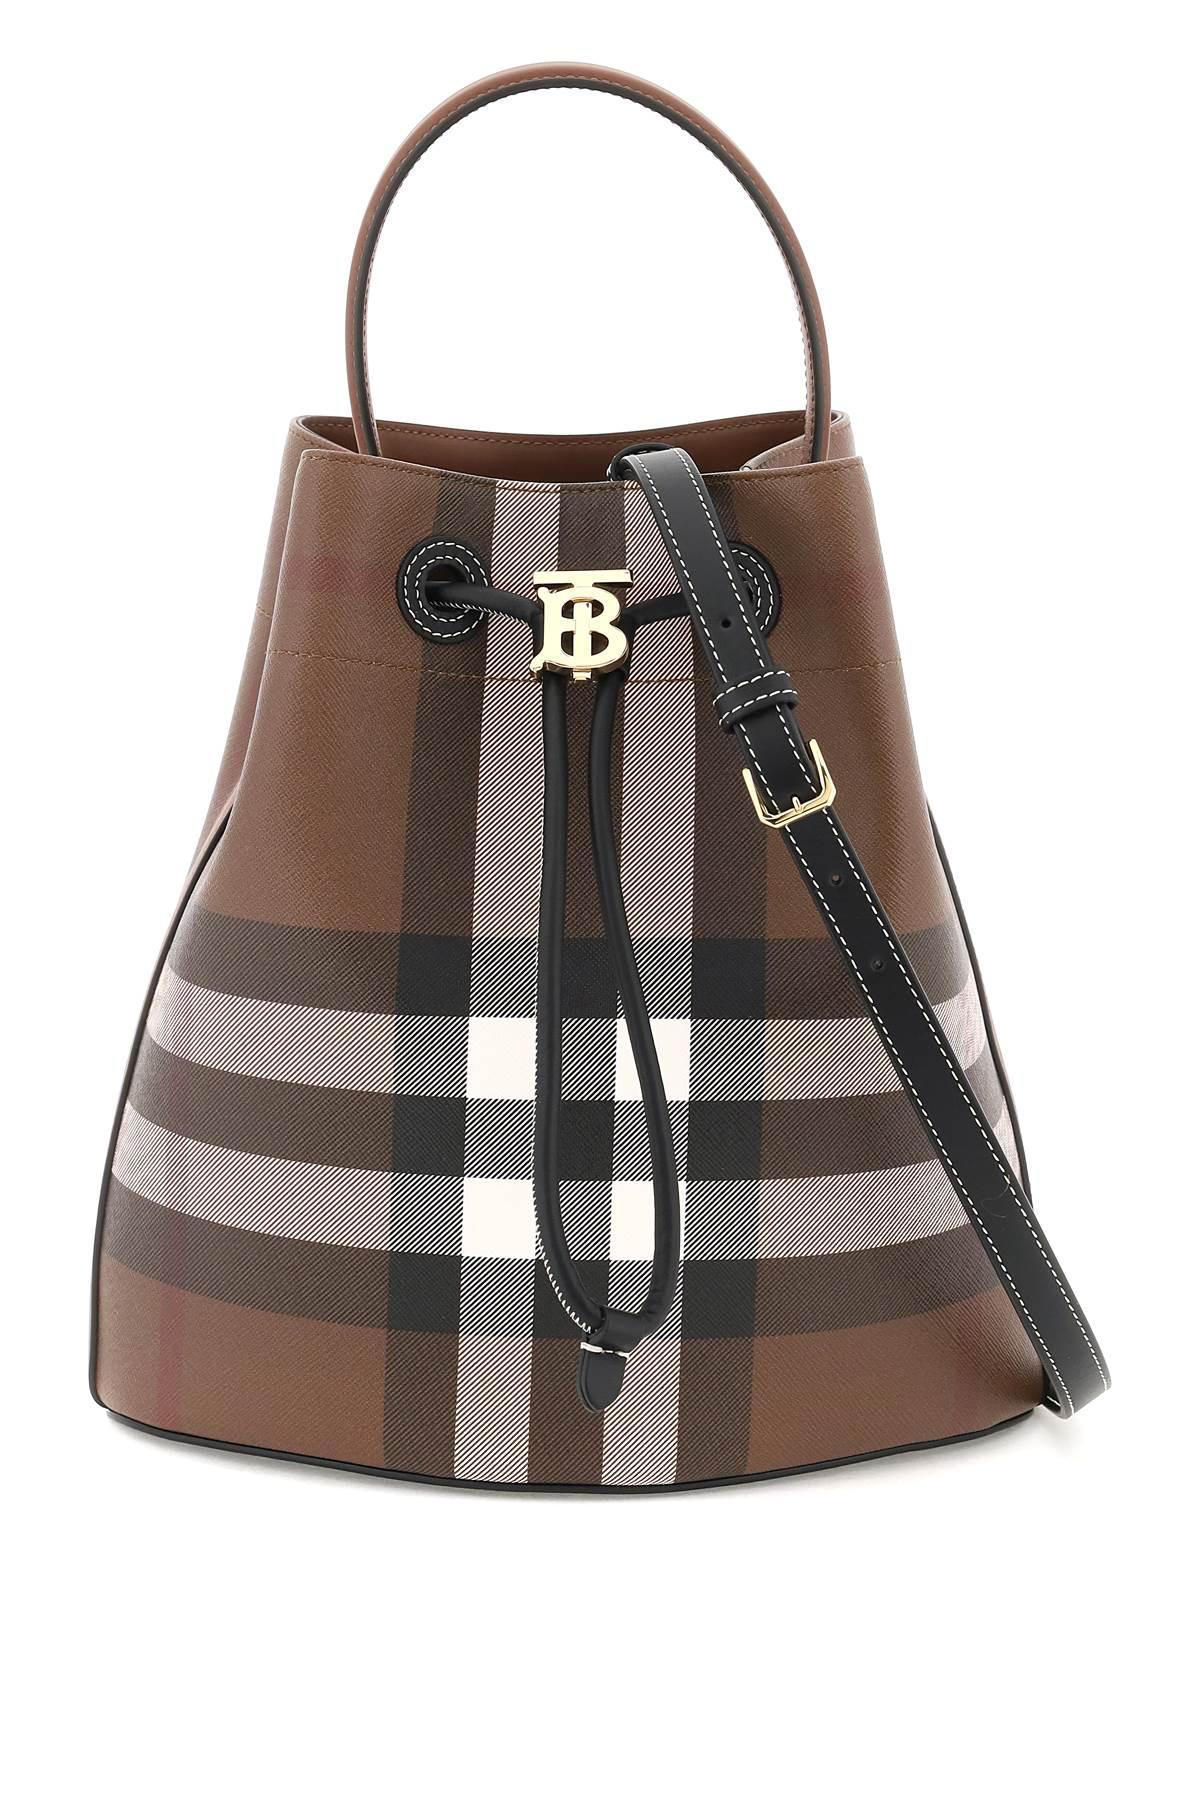 Burberry Small Tb Bucket Bag | Lyst